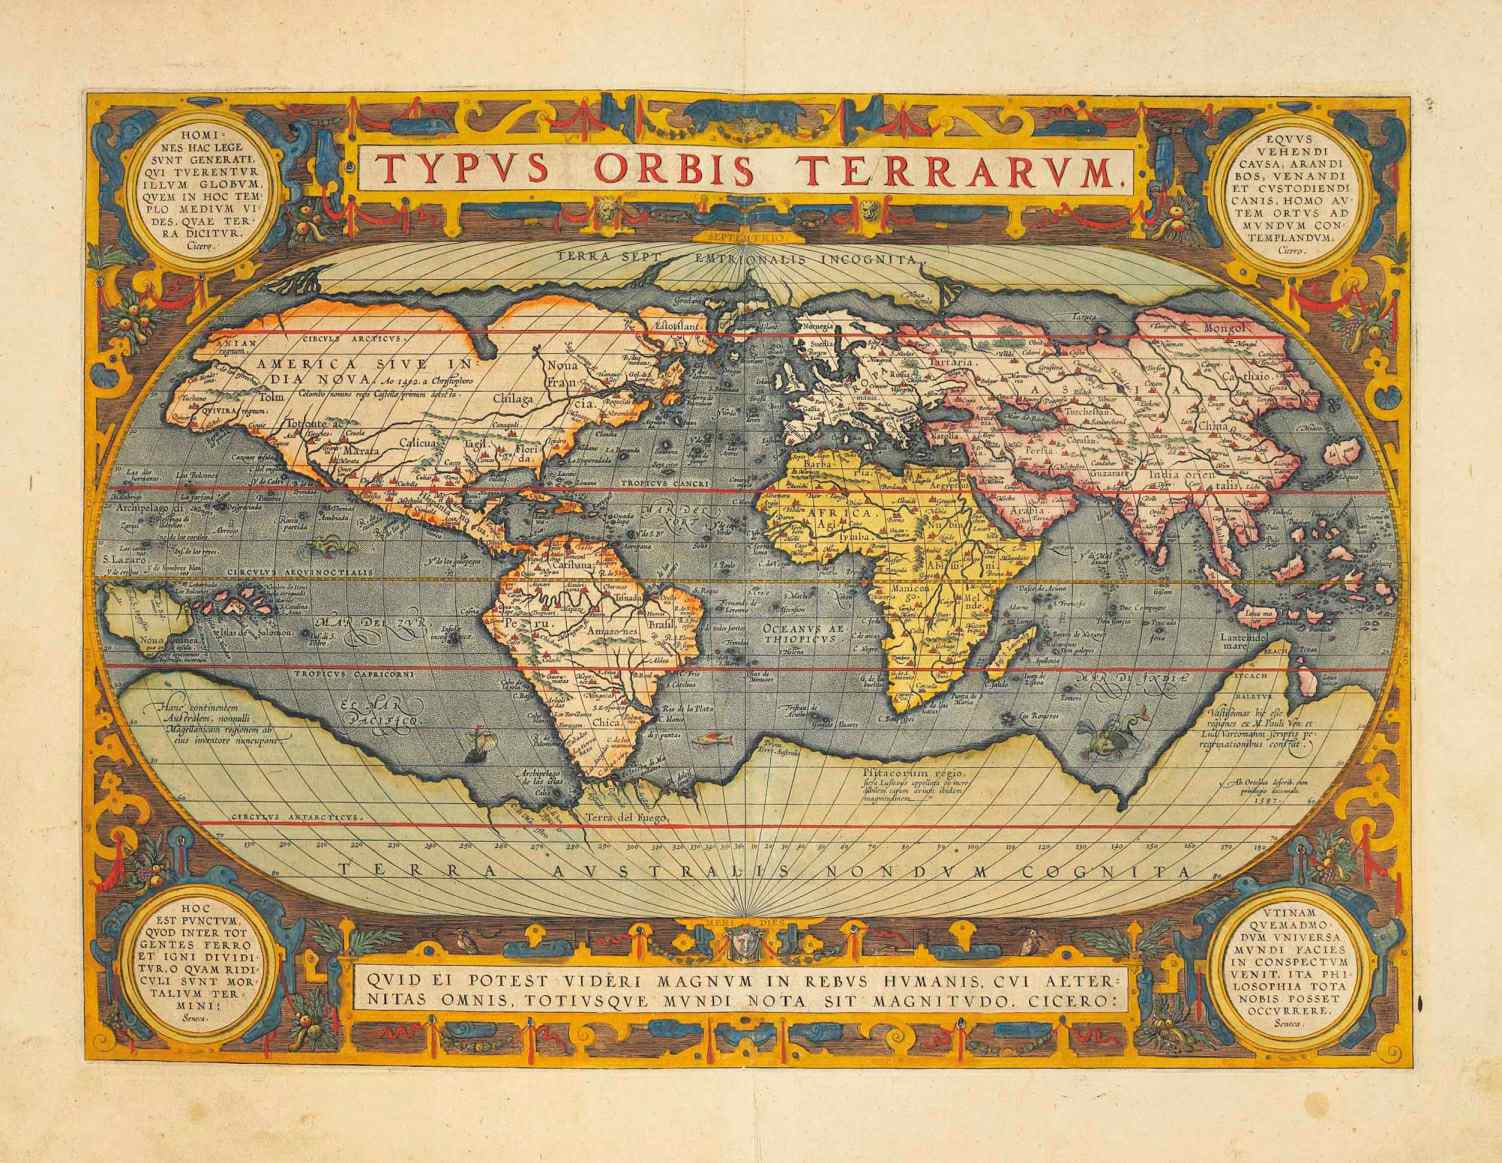 在這幅 1570 年的地圖上，Hyperborea 顯示為北極大陸，並被描述為“Terra Septemtrionalis Incognita”（未知的北方土地）。